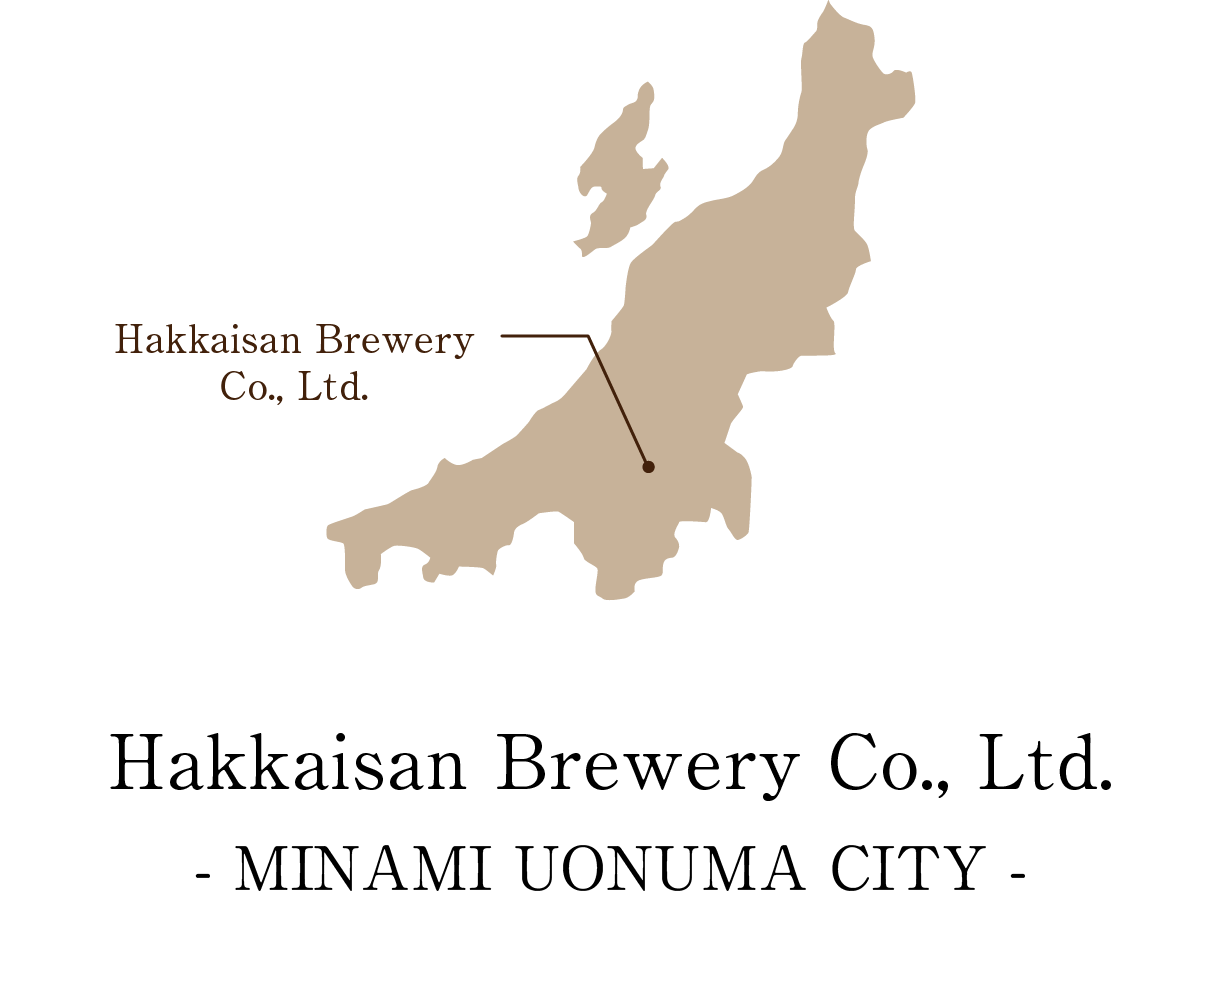 Hakkaisan Brewery Co., Ltd. MINAMIUONUMA CITY